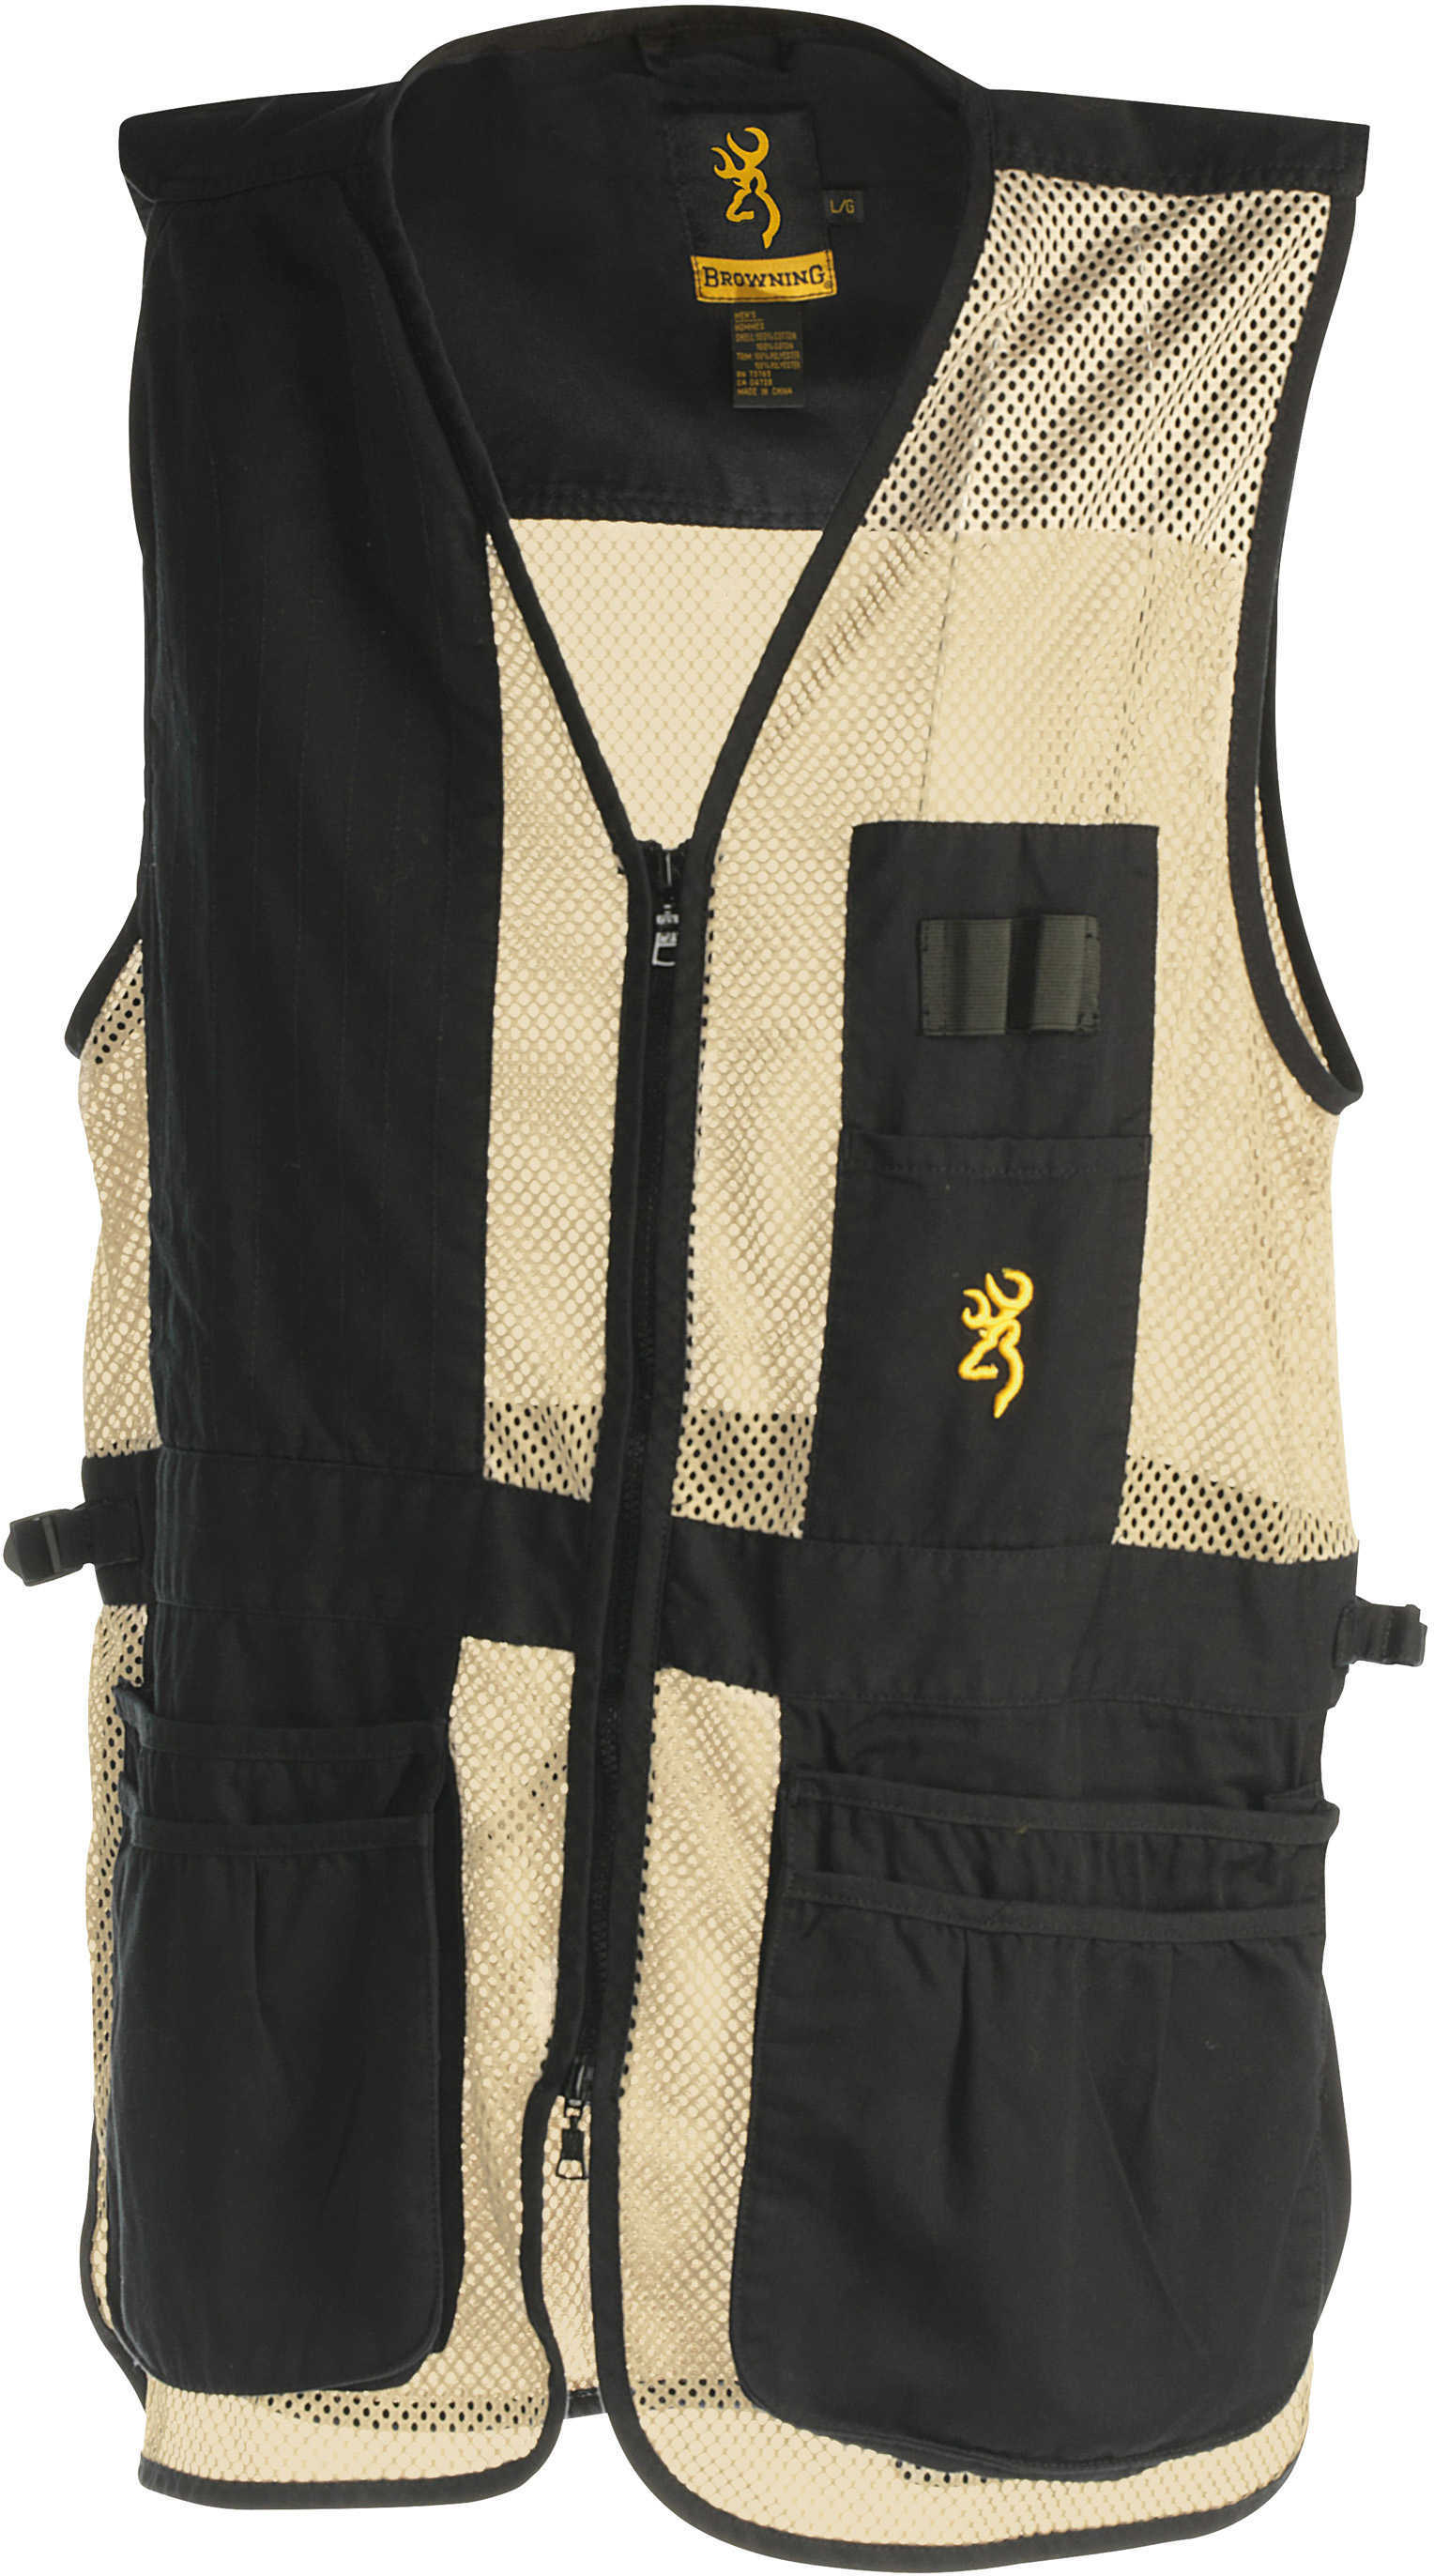 BG Trapper Creek Shooting Vest Black/Tan Large